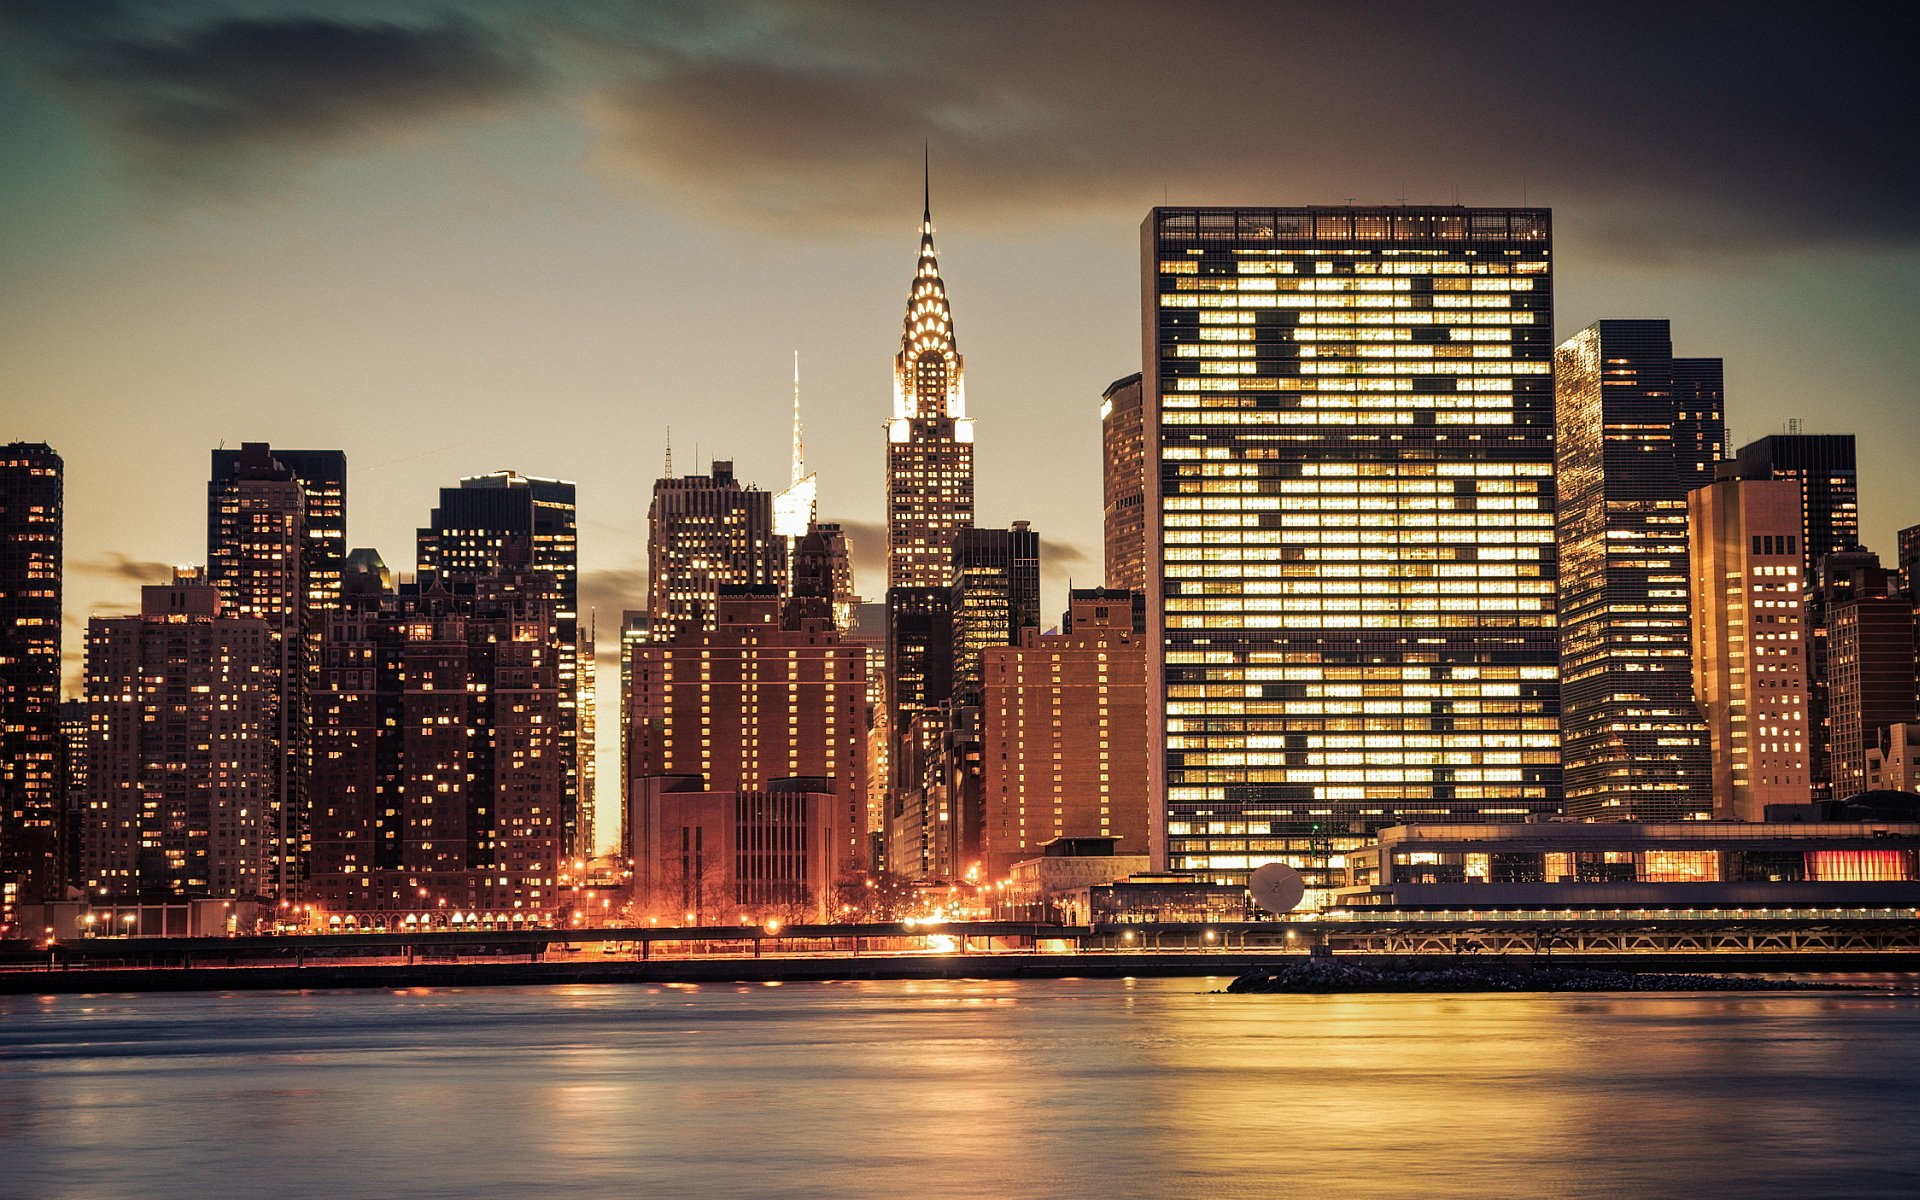 New york city skyline